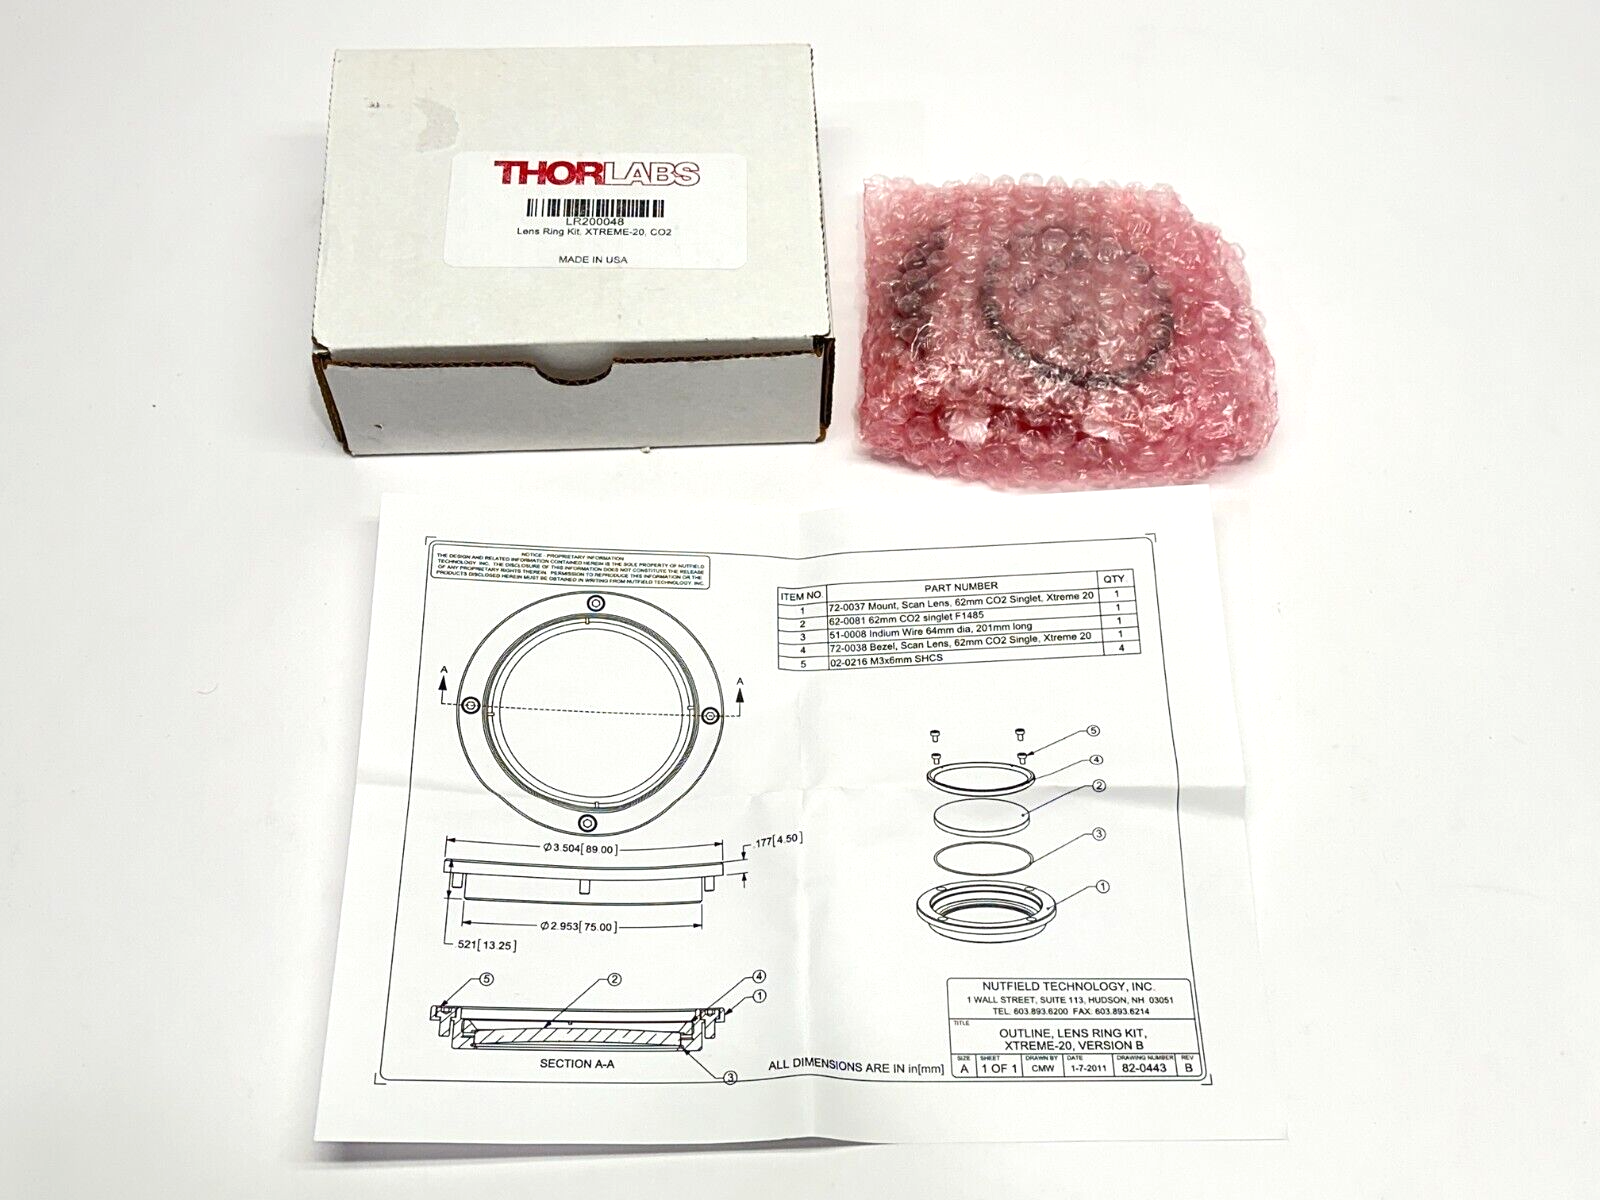 Thorlabs LR200048 XTREME-20 Lens Ring Kit CO2 Version B